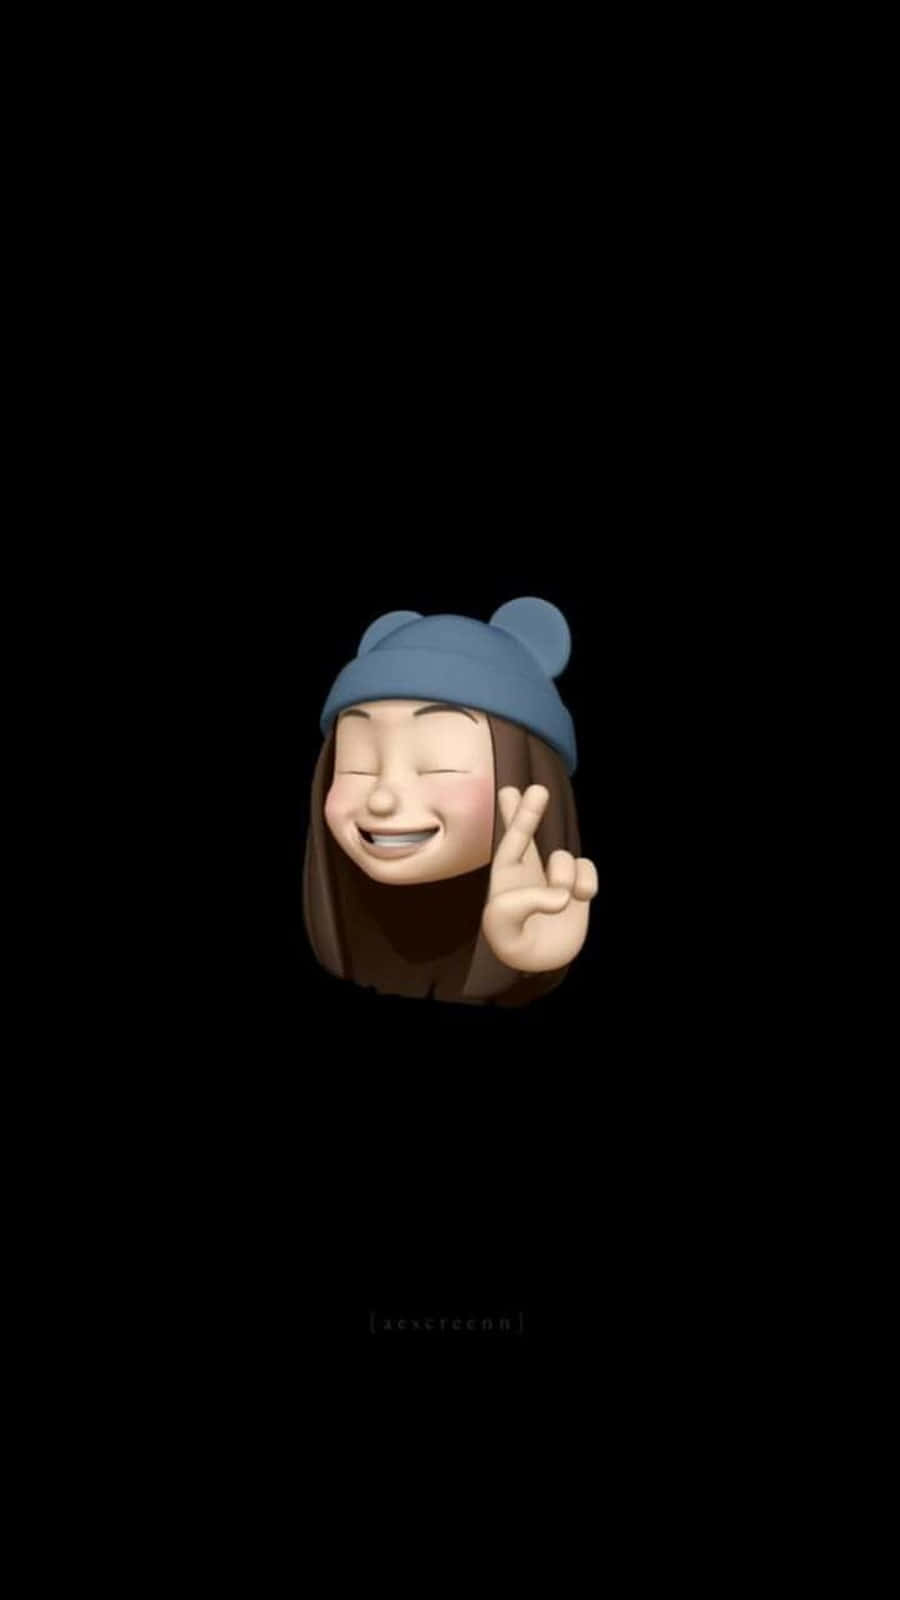 Cool Emoji Girl Crossed Fingers Wallpaper